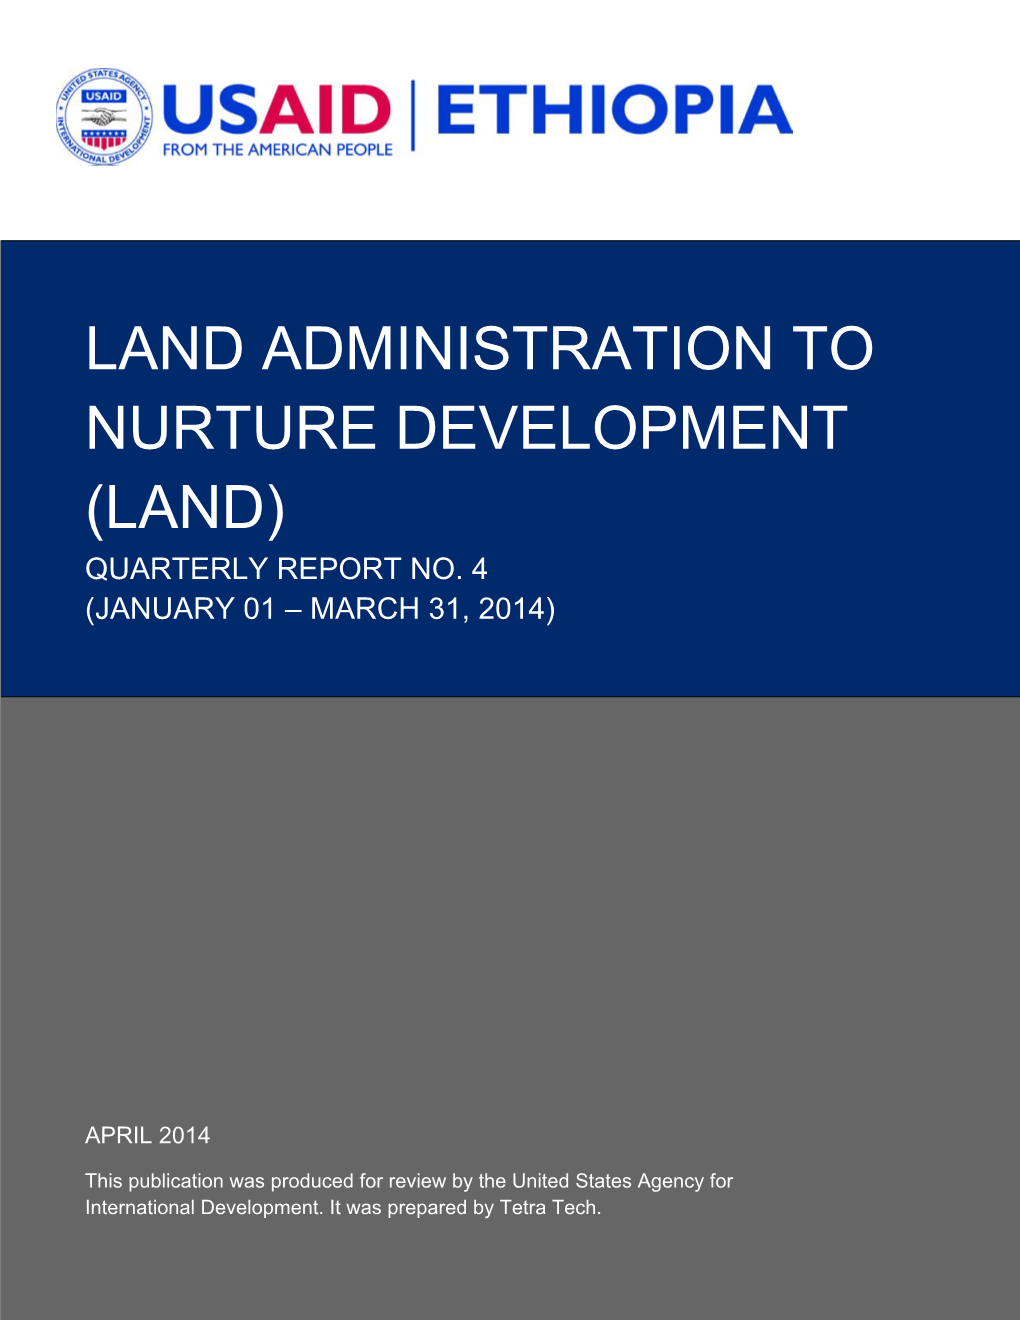 Land Administration to Nurture Development (Land) Quarterly Report No